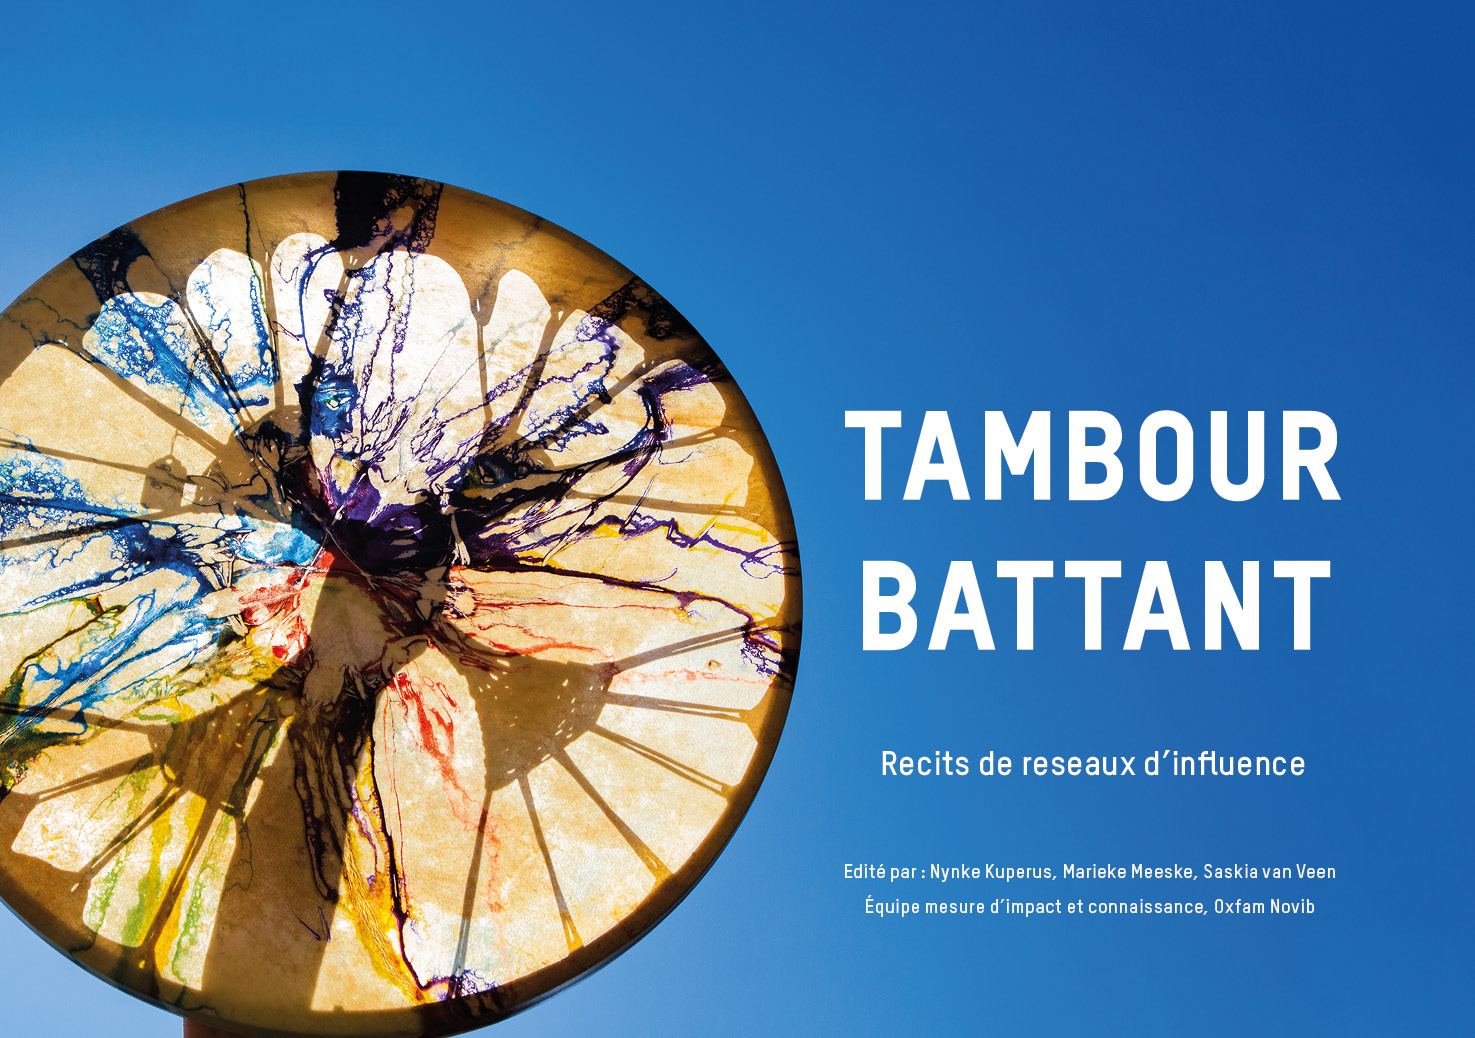 Tambour Battant: Recits de Reseaux d'Influence